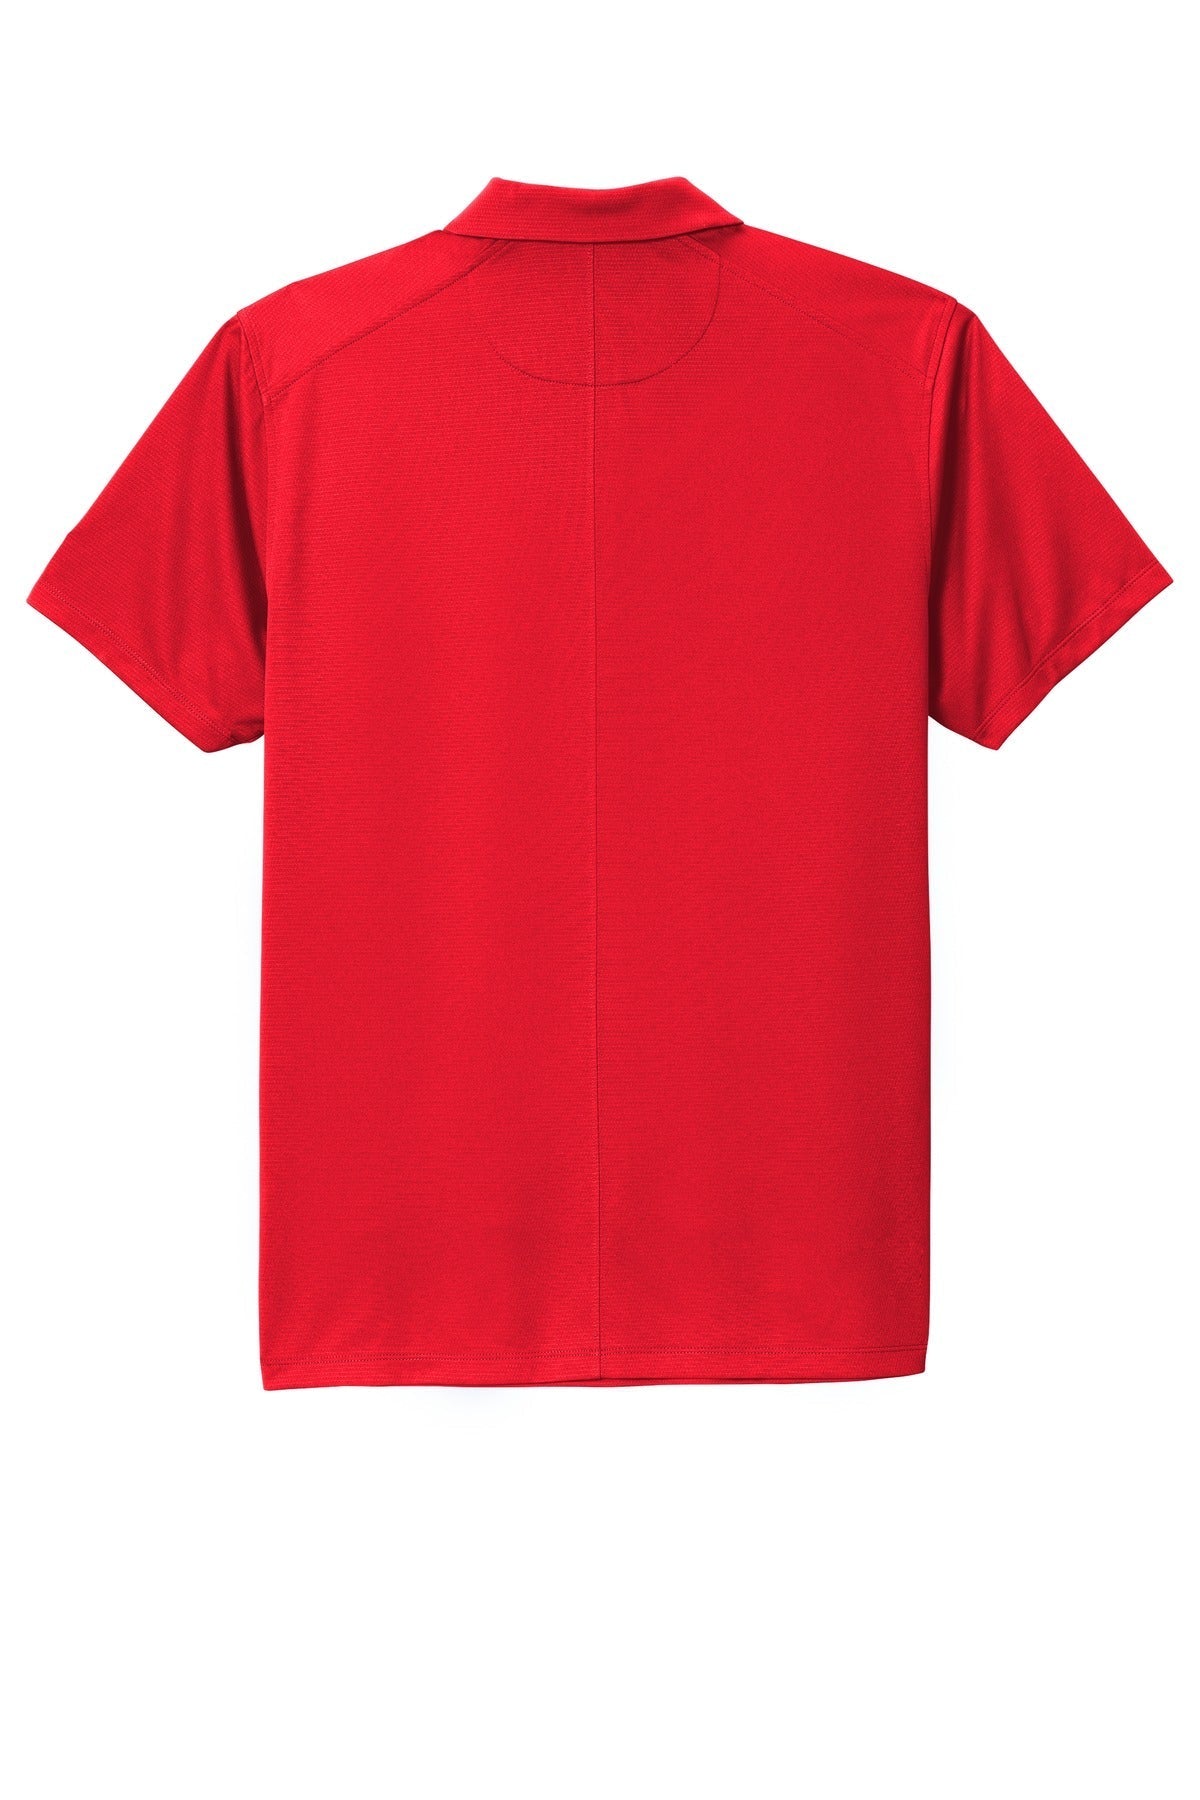 Nike Dry Essential Solid Polo NKBV6042 - BT Imprintables Shirts